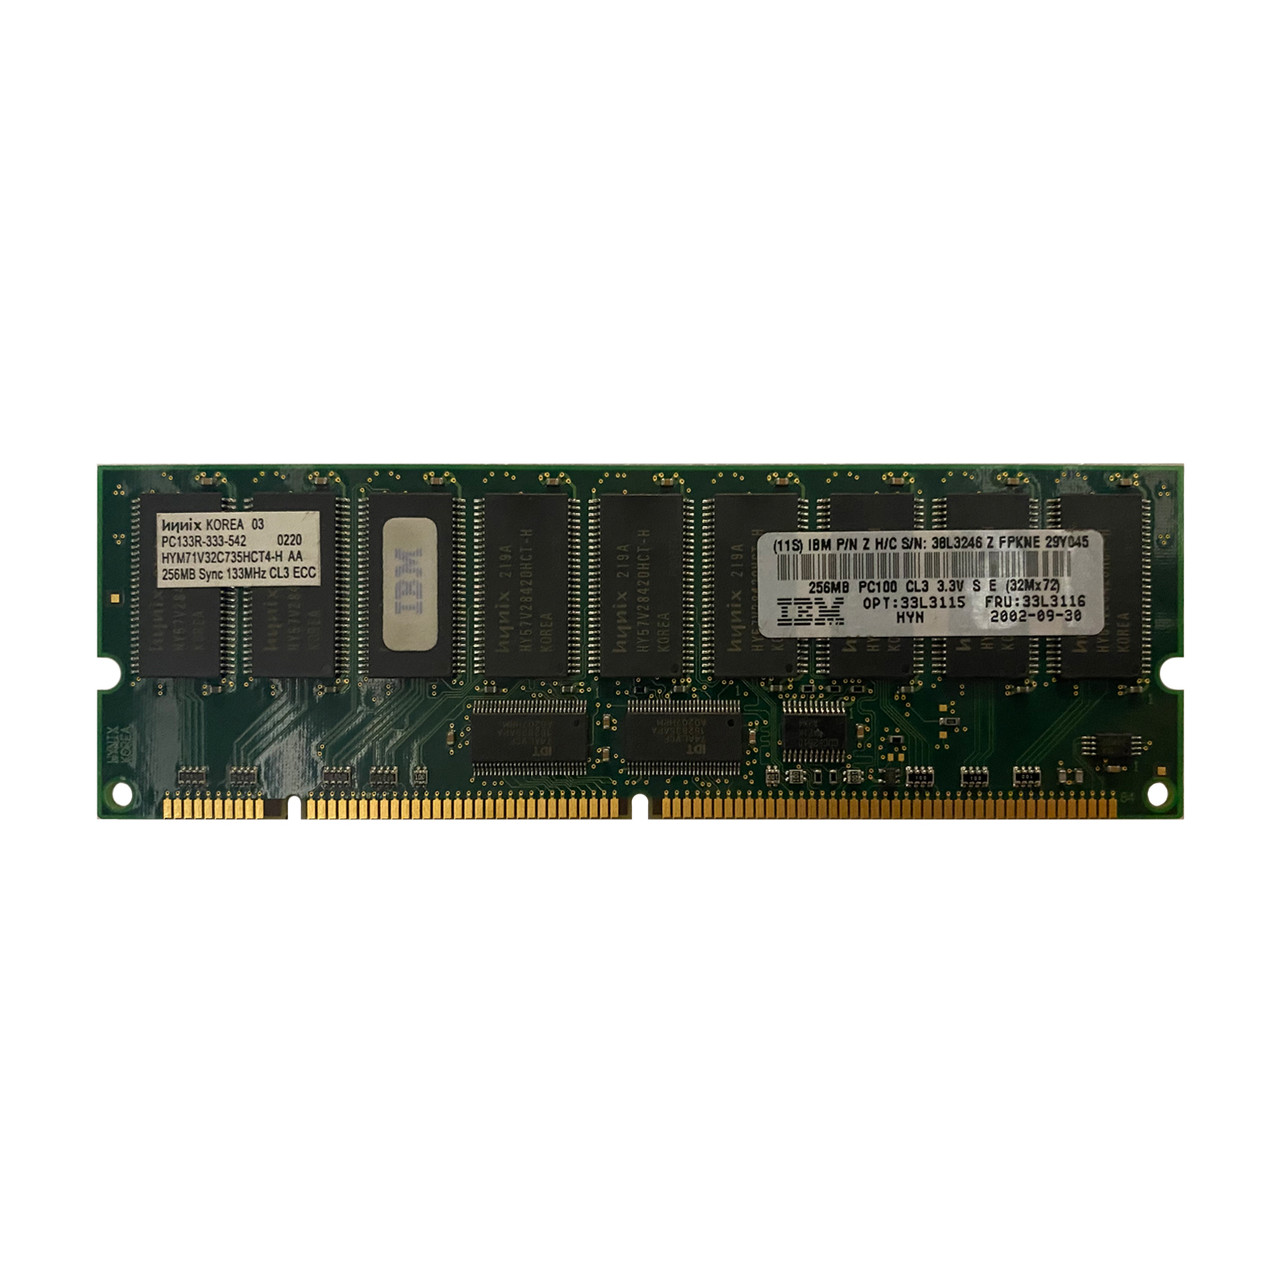 IBM 33L3116 256MB PC-100 DDR Memory Module 33L3115